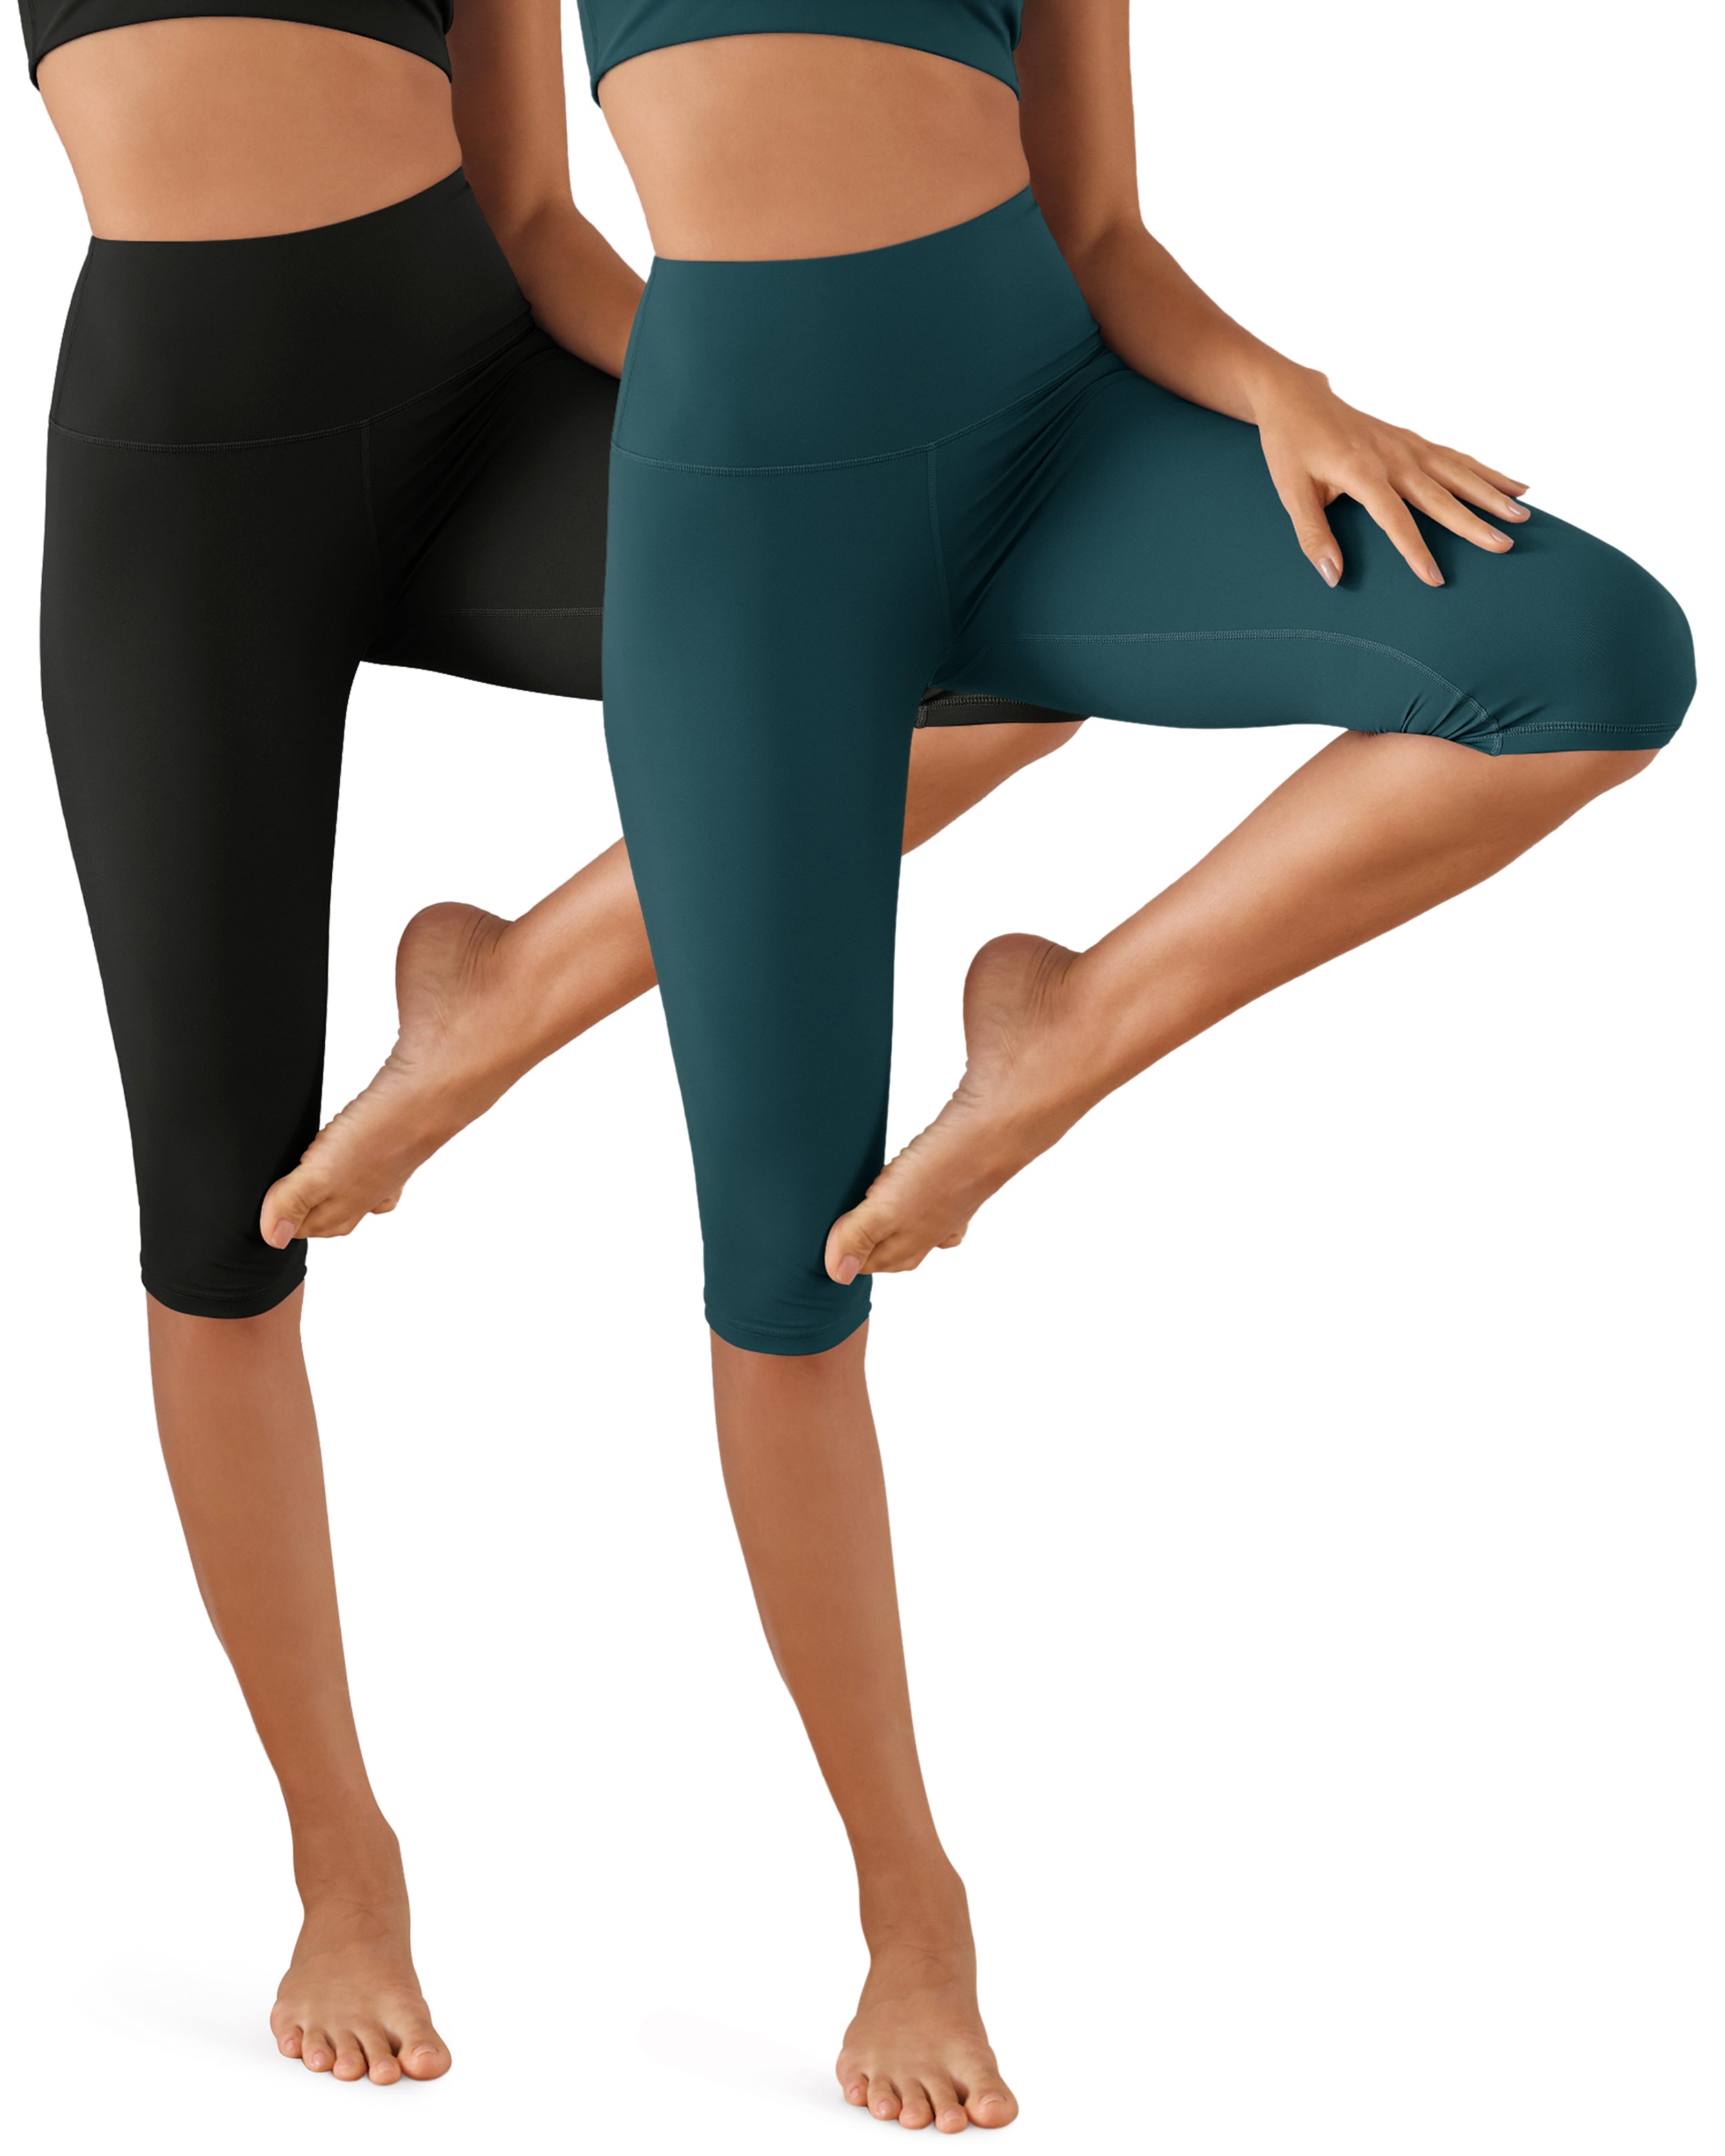 ODCLOUD 2-Pack High Waist Yoga Capris - Knee Length Black+Forest Teal - ododos